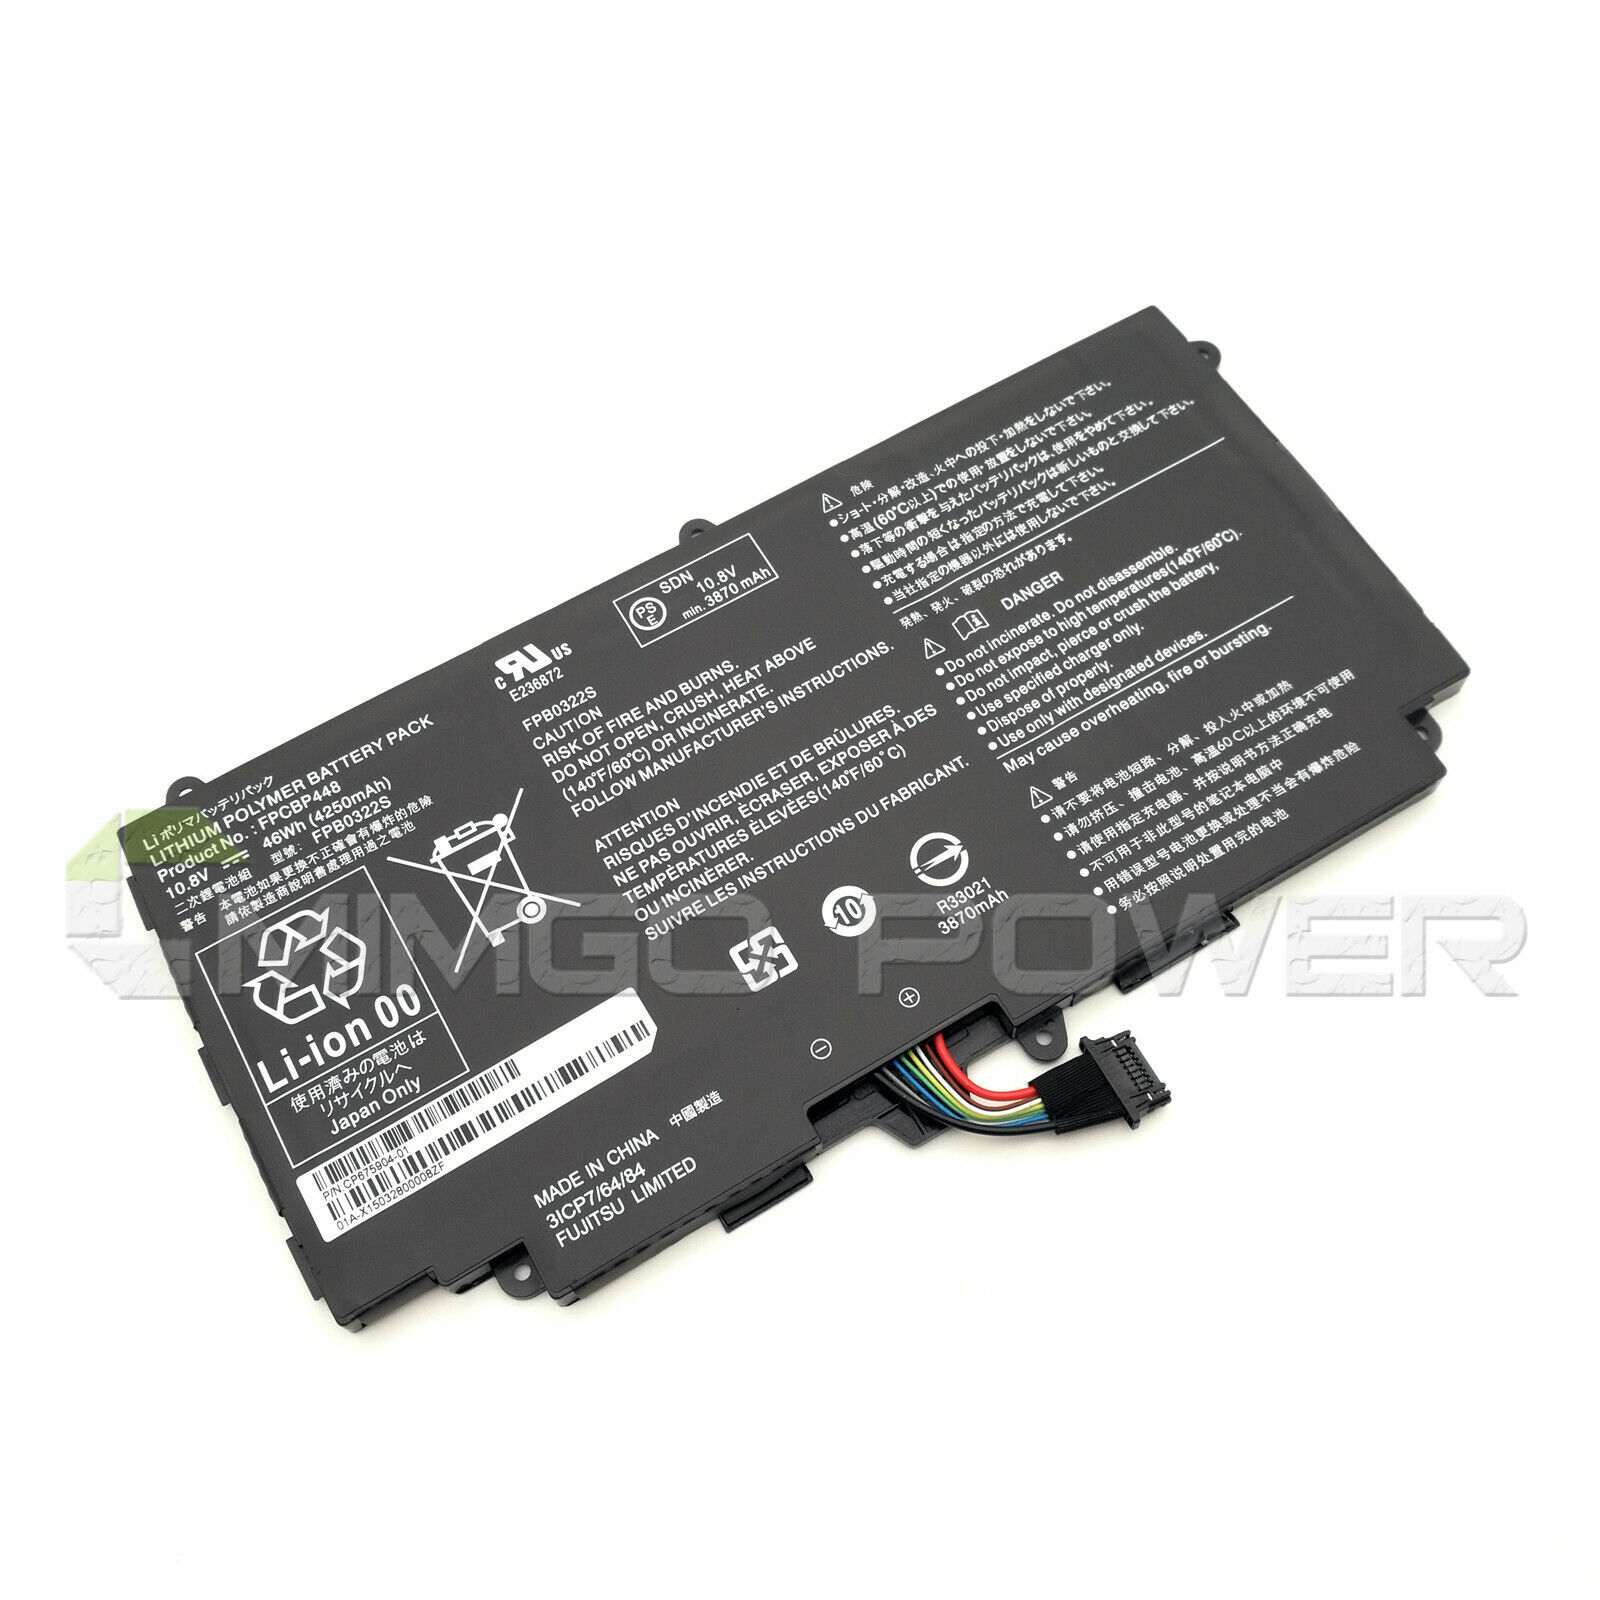 New Genuine FPCBP448 FPB0322S OEM Battery for Fujitsu Stylistic Q737 Q775 Q736